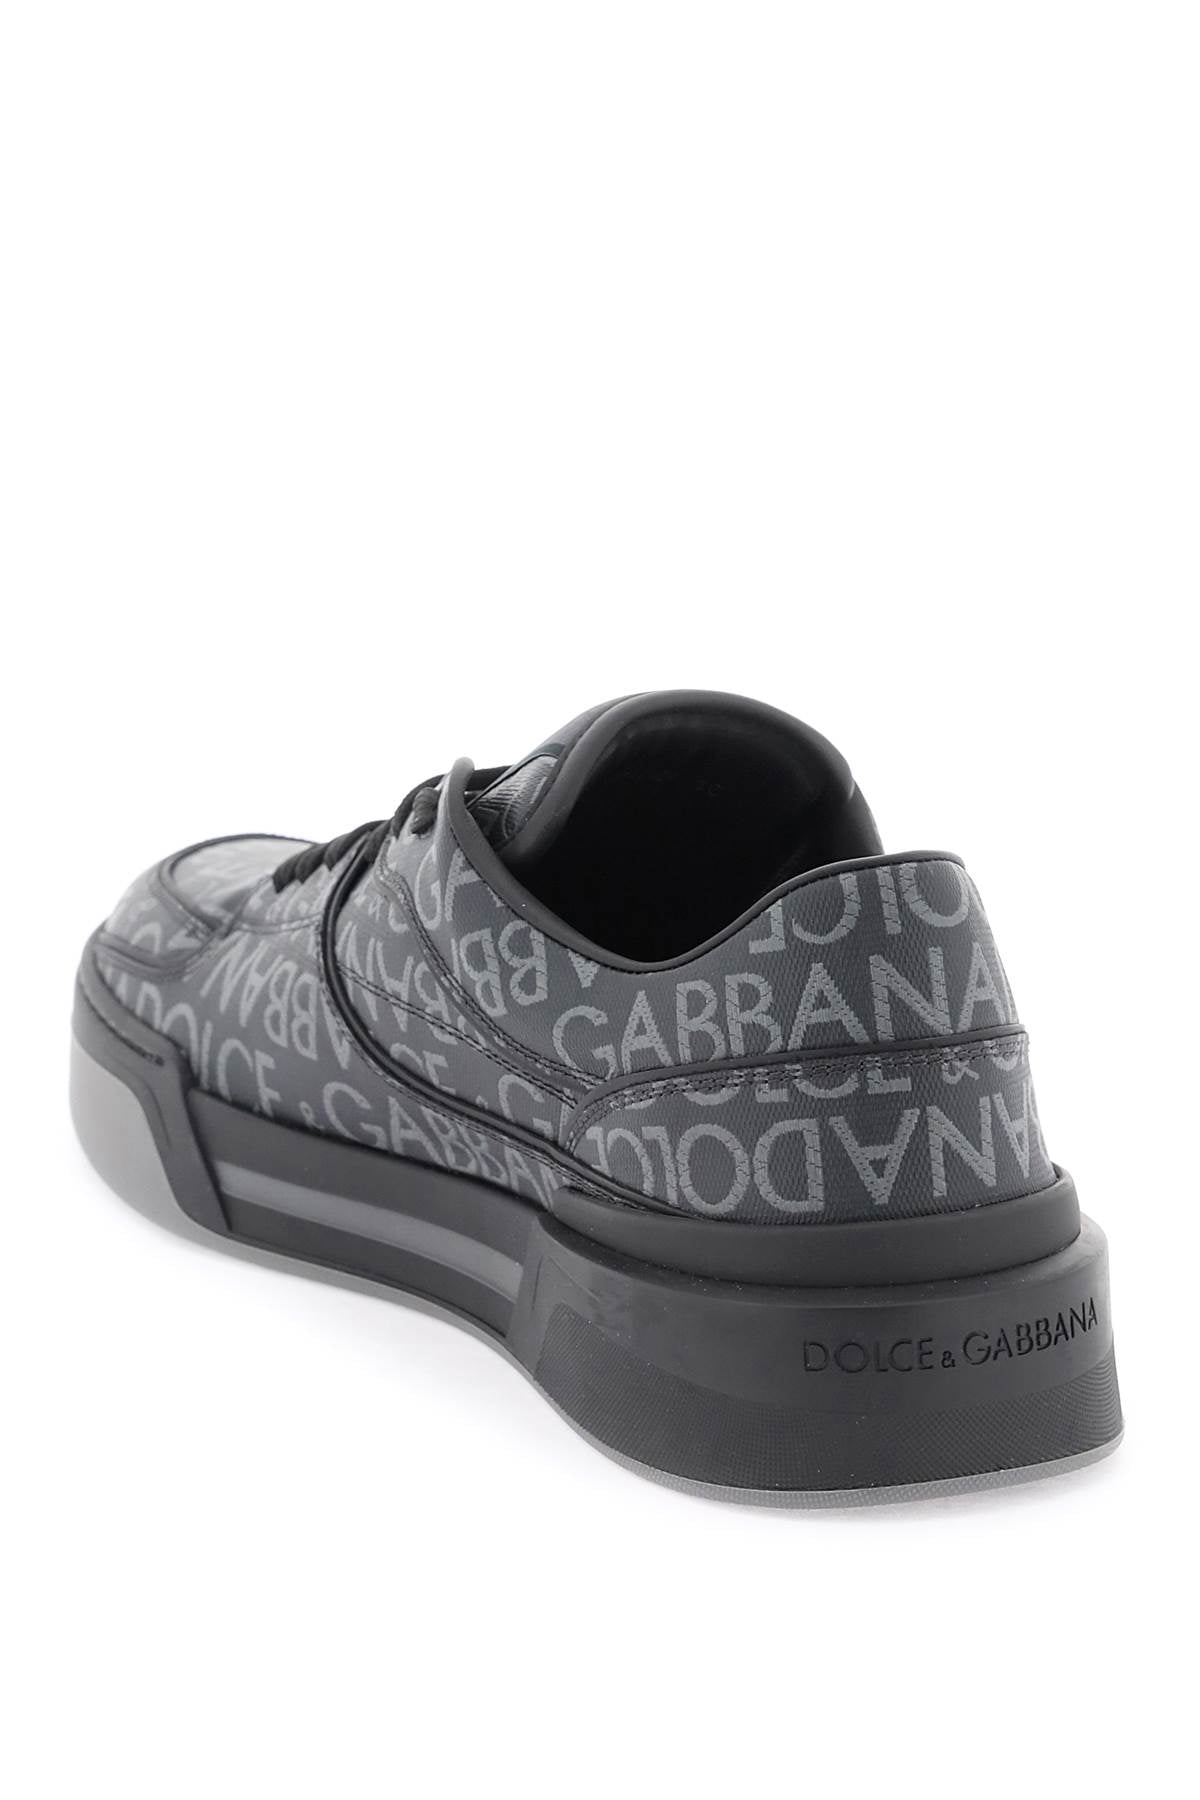 Dolce & Gabbana SNEAKER 'NEW ROMA' CS2036AM9248B969